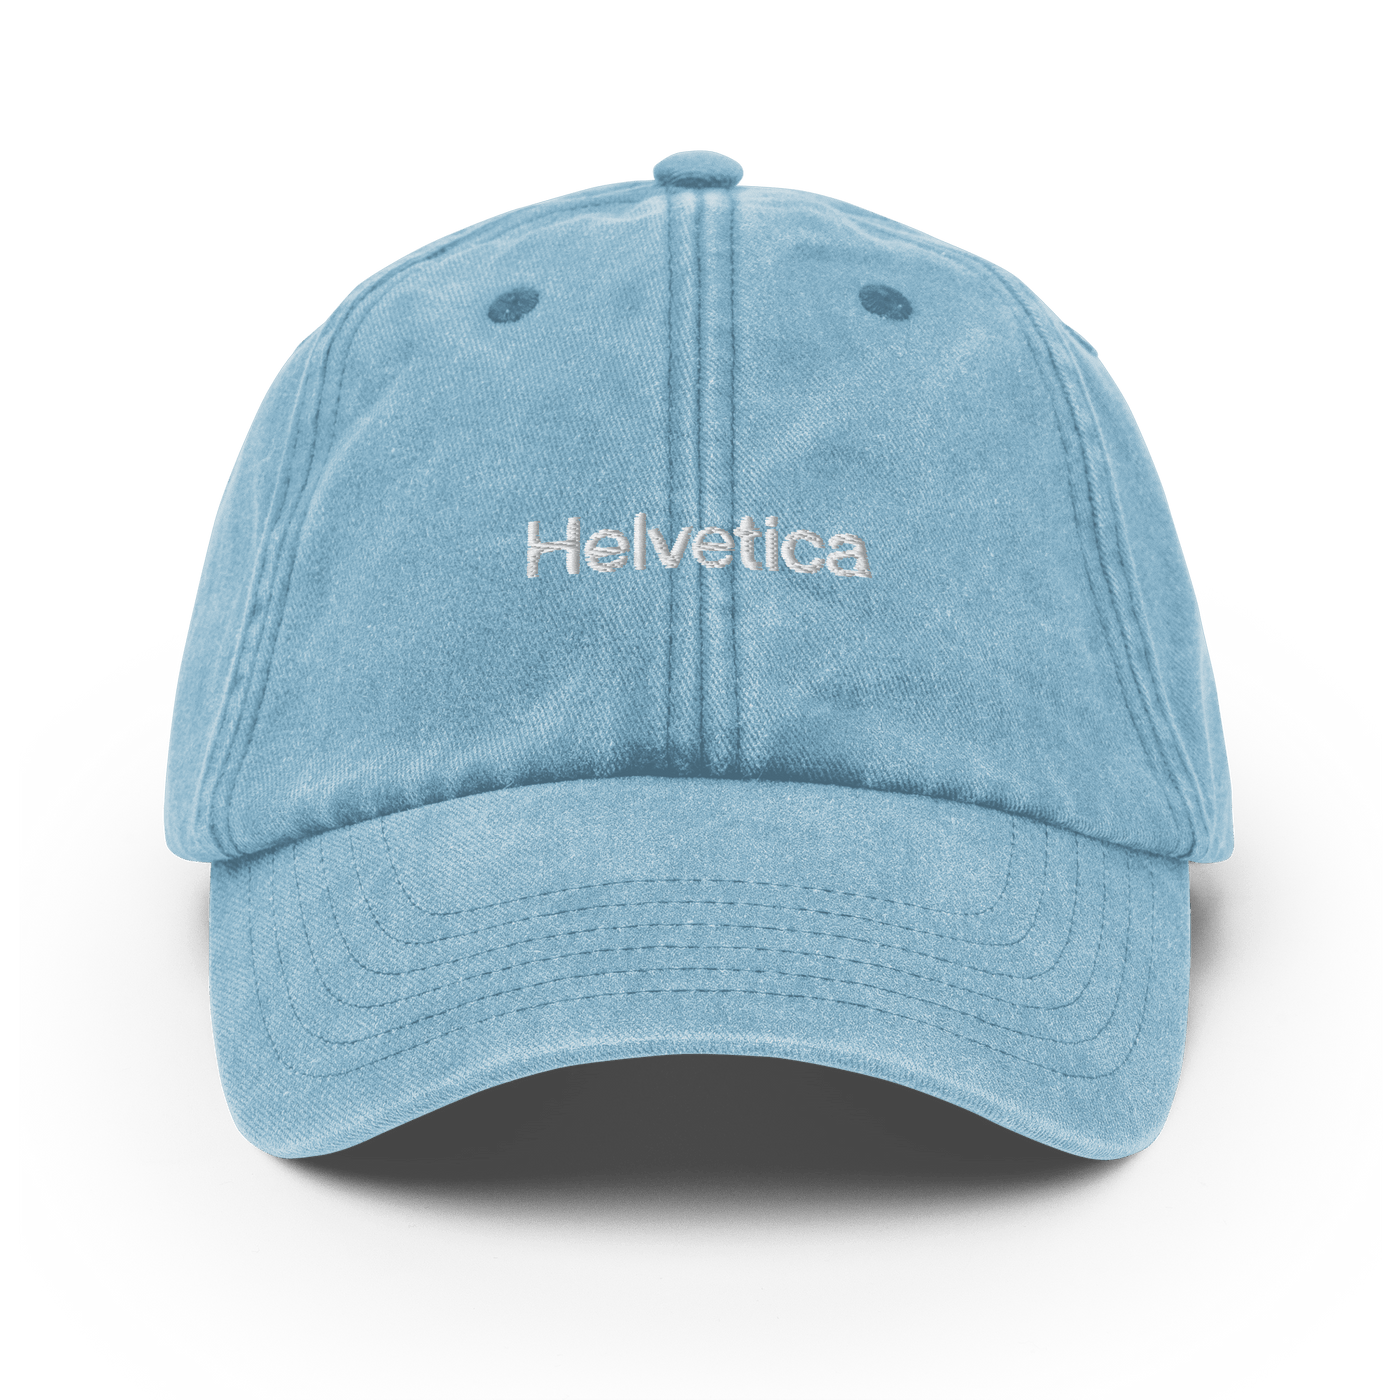 Helvetica Vintage Hat - Vintage Light Denim - - Just Another Cap Store